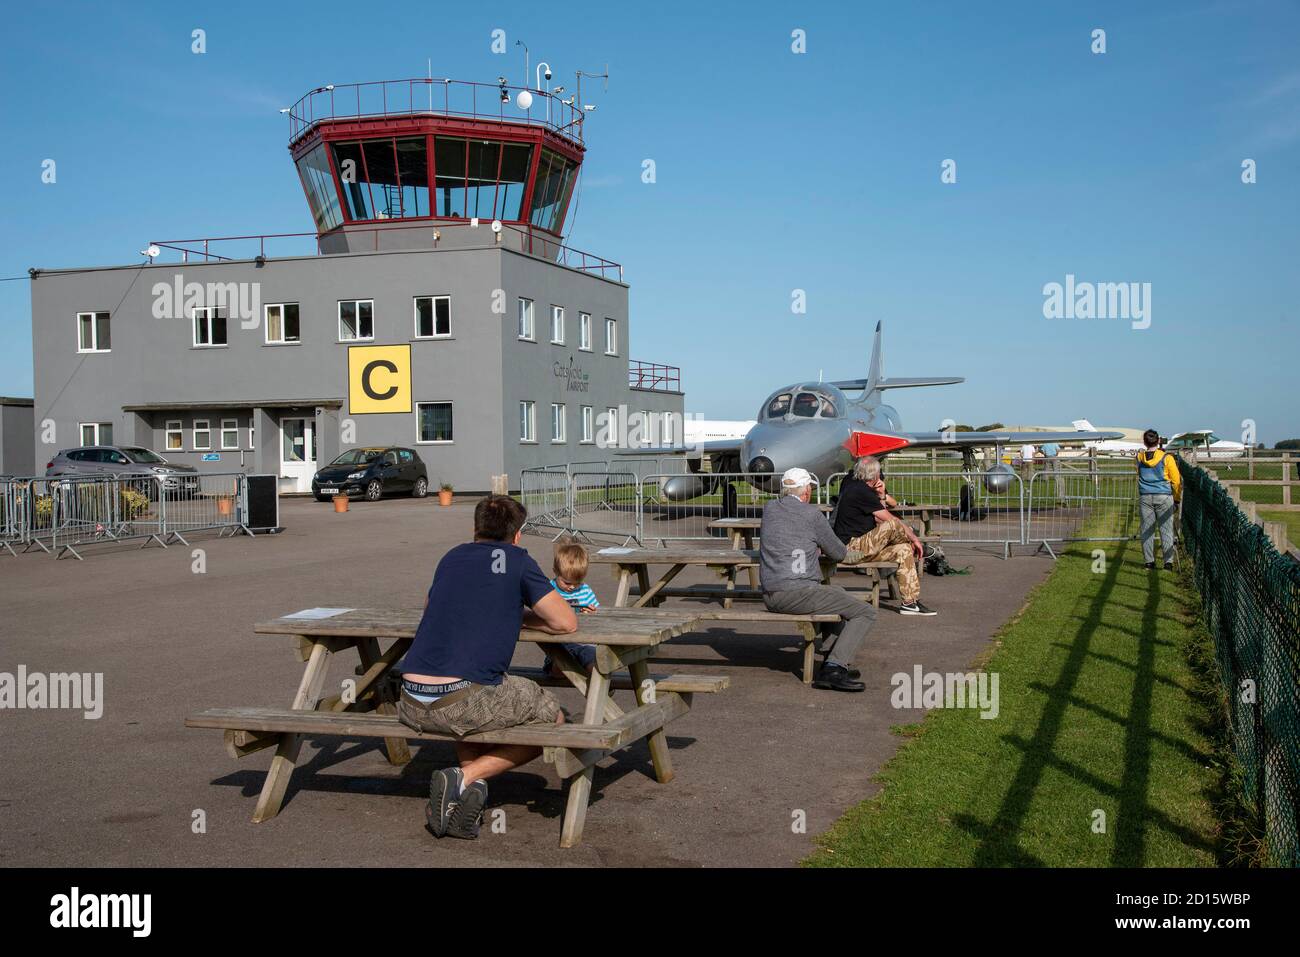 Kemble, Gloucestershire, England, UK. 2020. Control tower at Cotswold Airport at Kemble, Gloucetsershire, UK. A former RAF base. Stock Photo